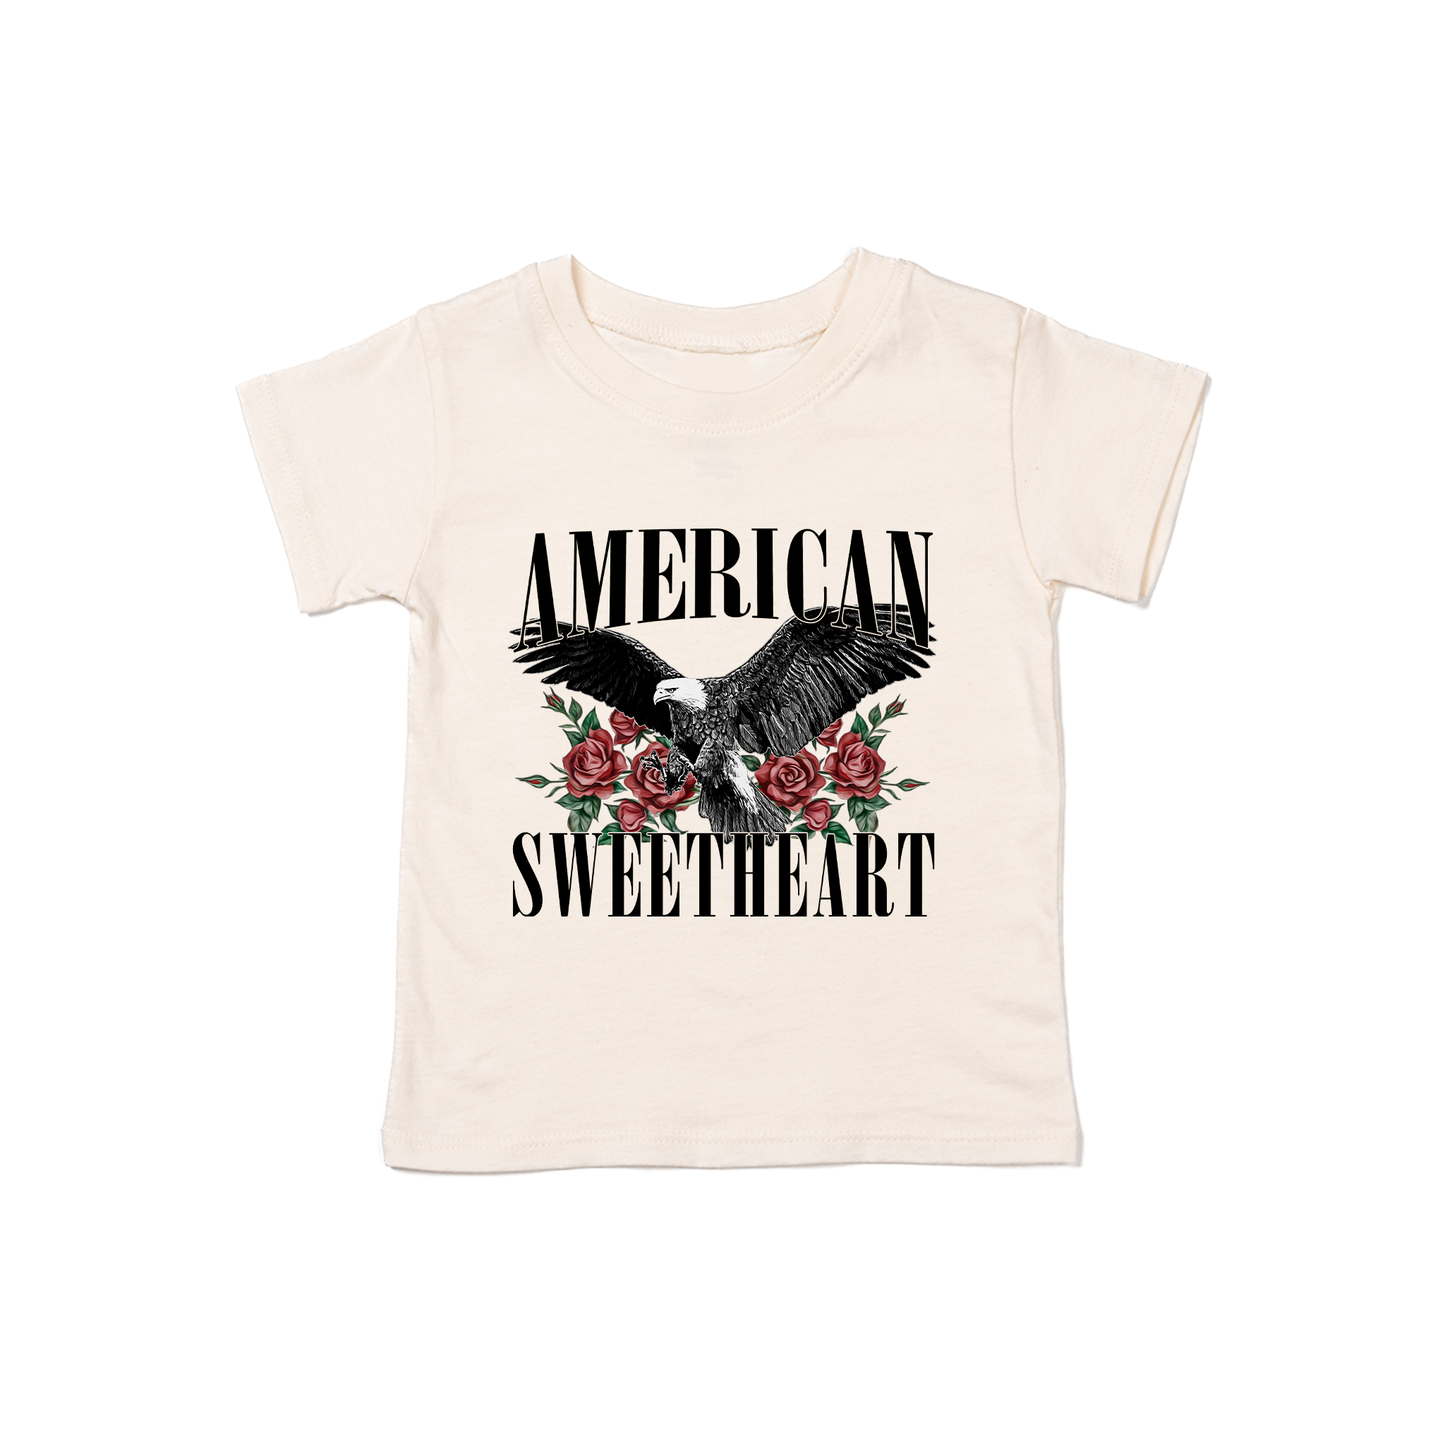 American Sweetheart (Graphic) - Kids Tee (Natural)